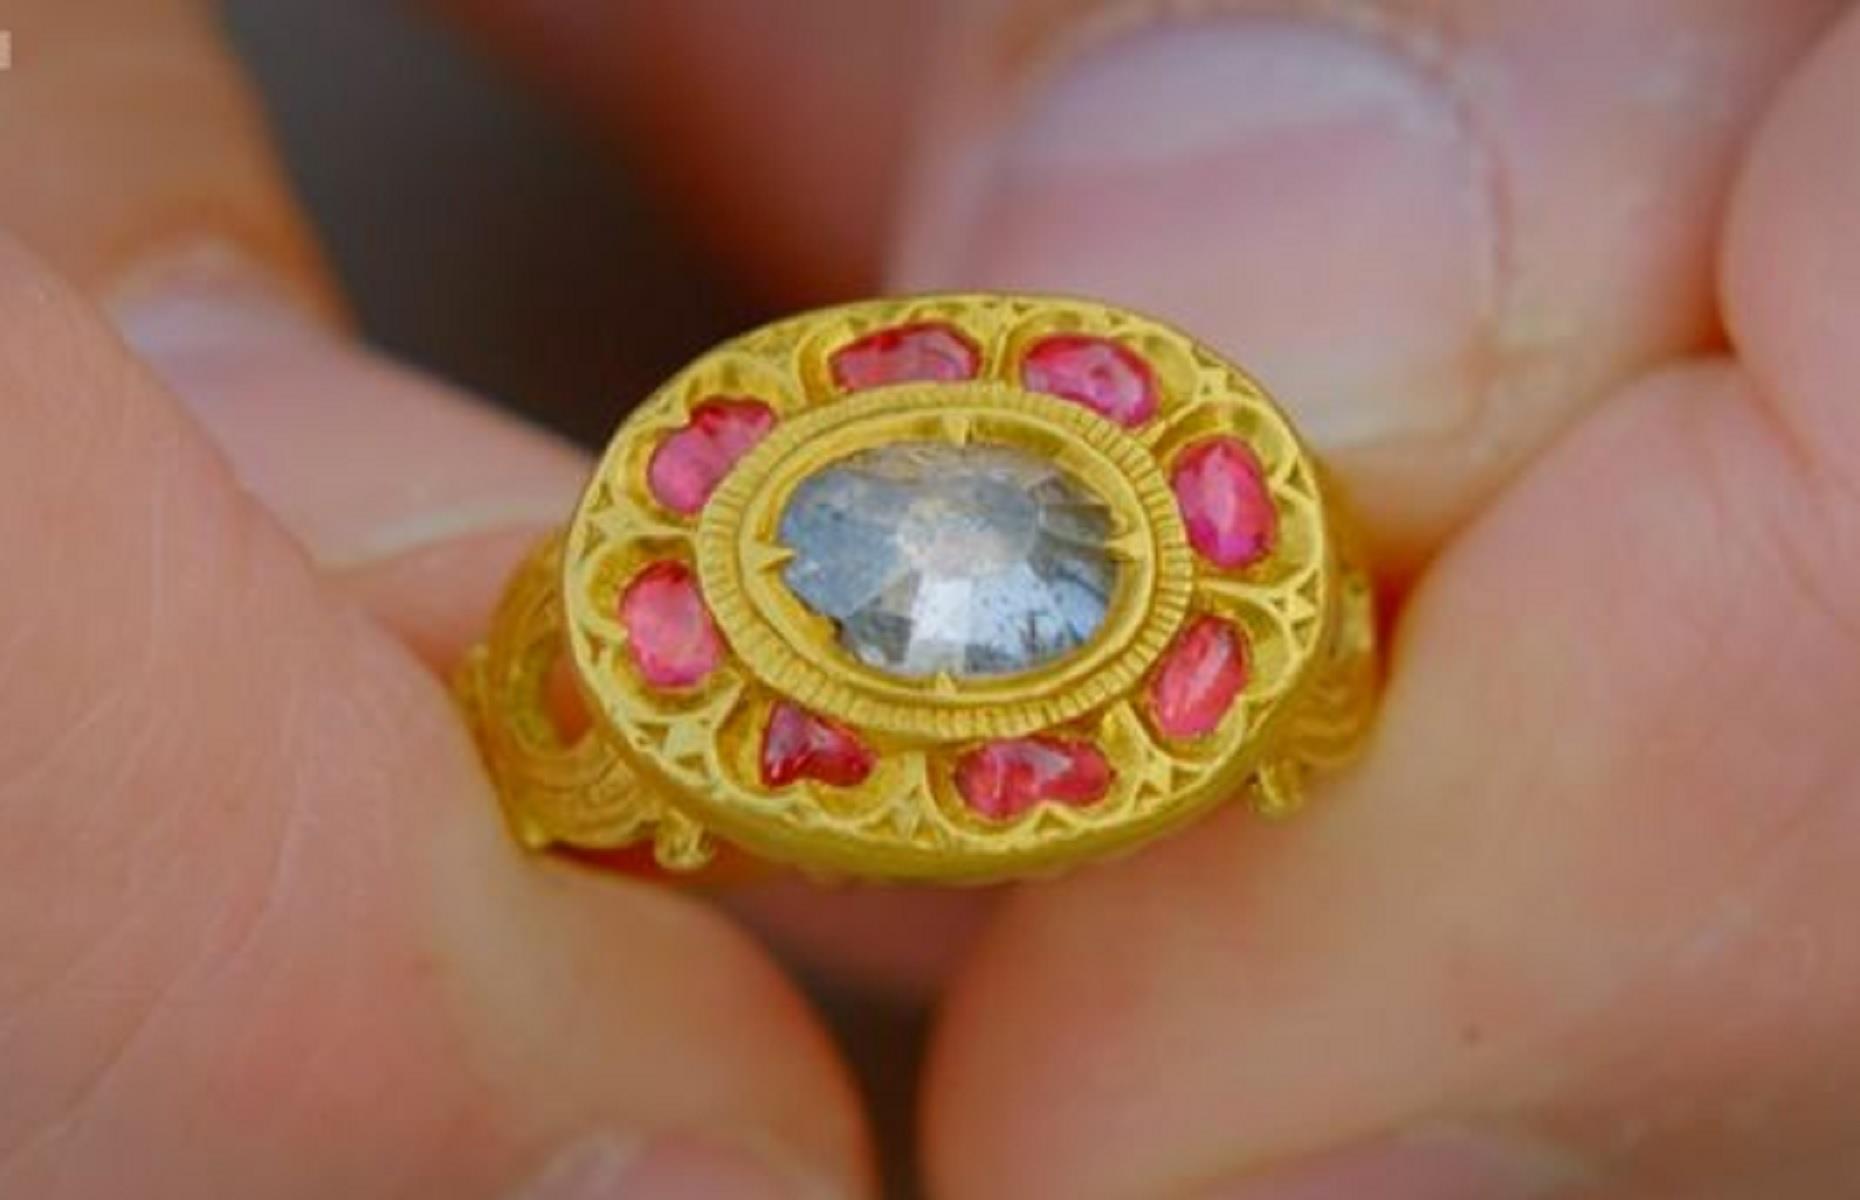 The Georgian diamond and ruby ring